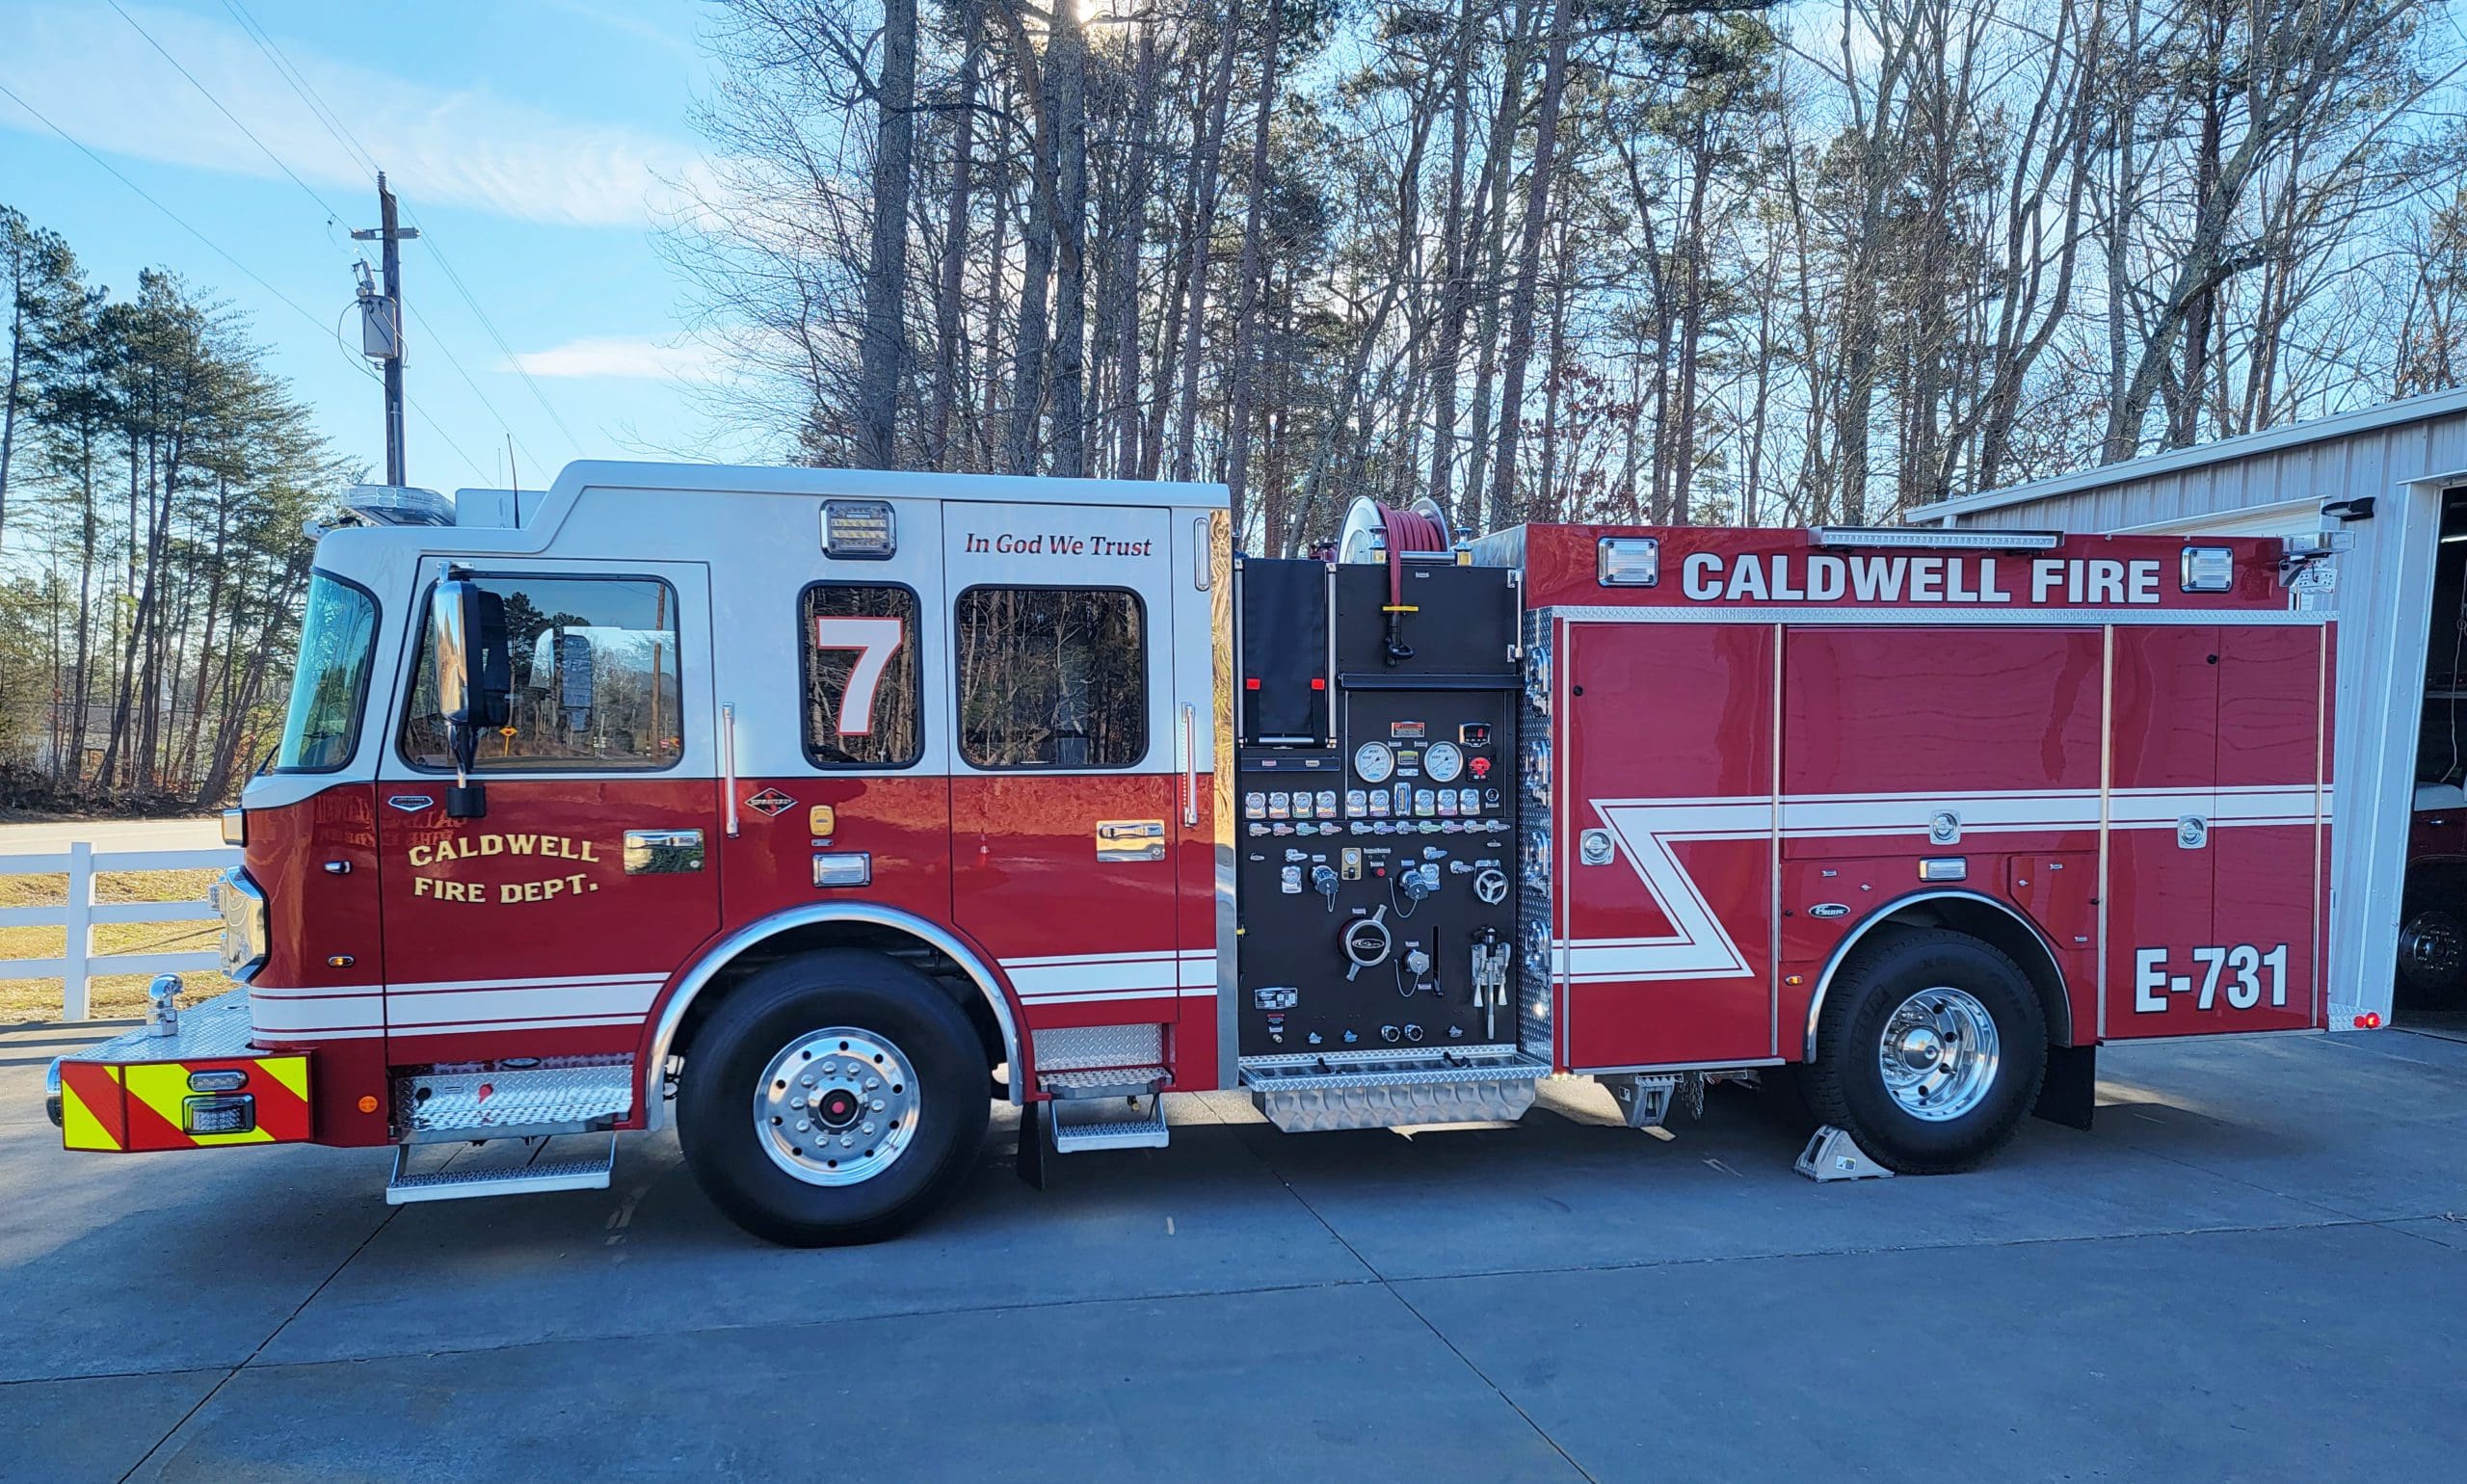 Caldwell Fire Department's new truck